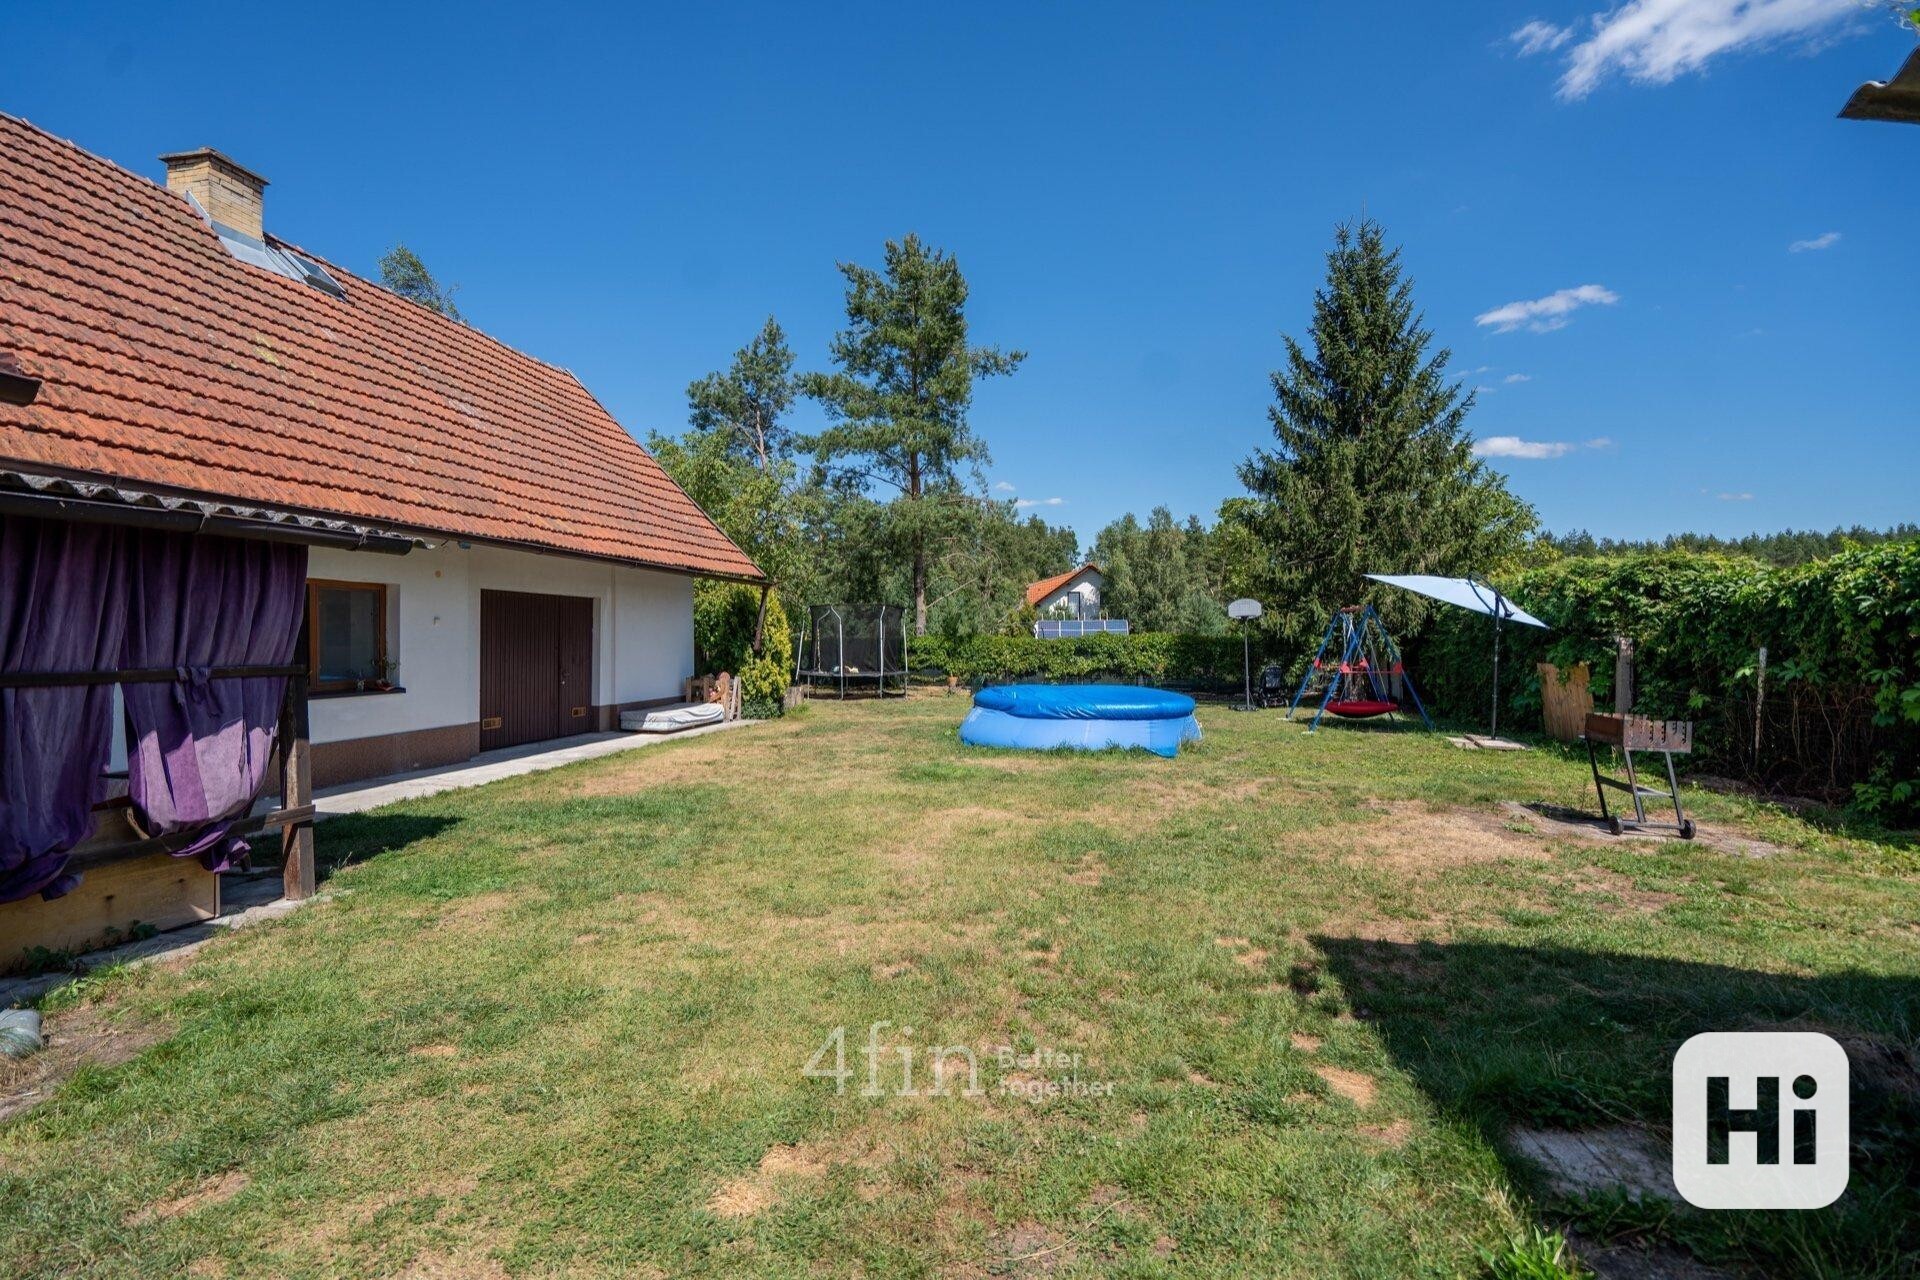 Prodej rodinného domu 130 m2, zahrada 500 m2, Čermná nad Orlicí - foto 11